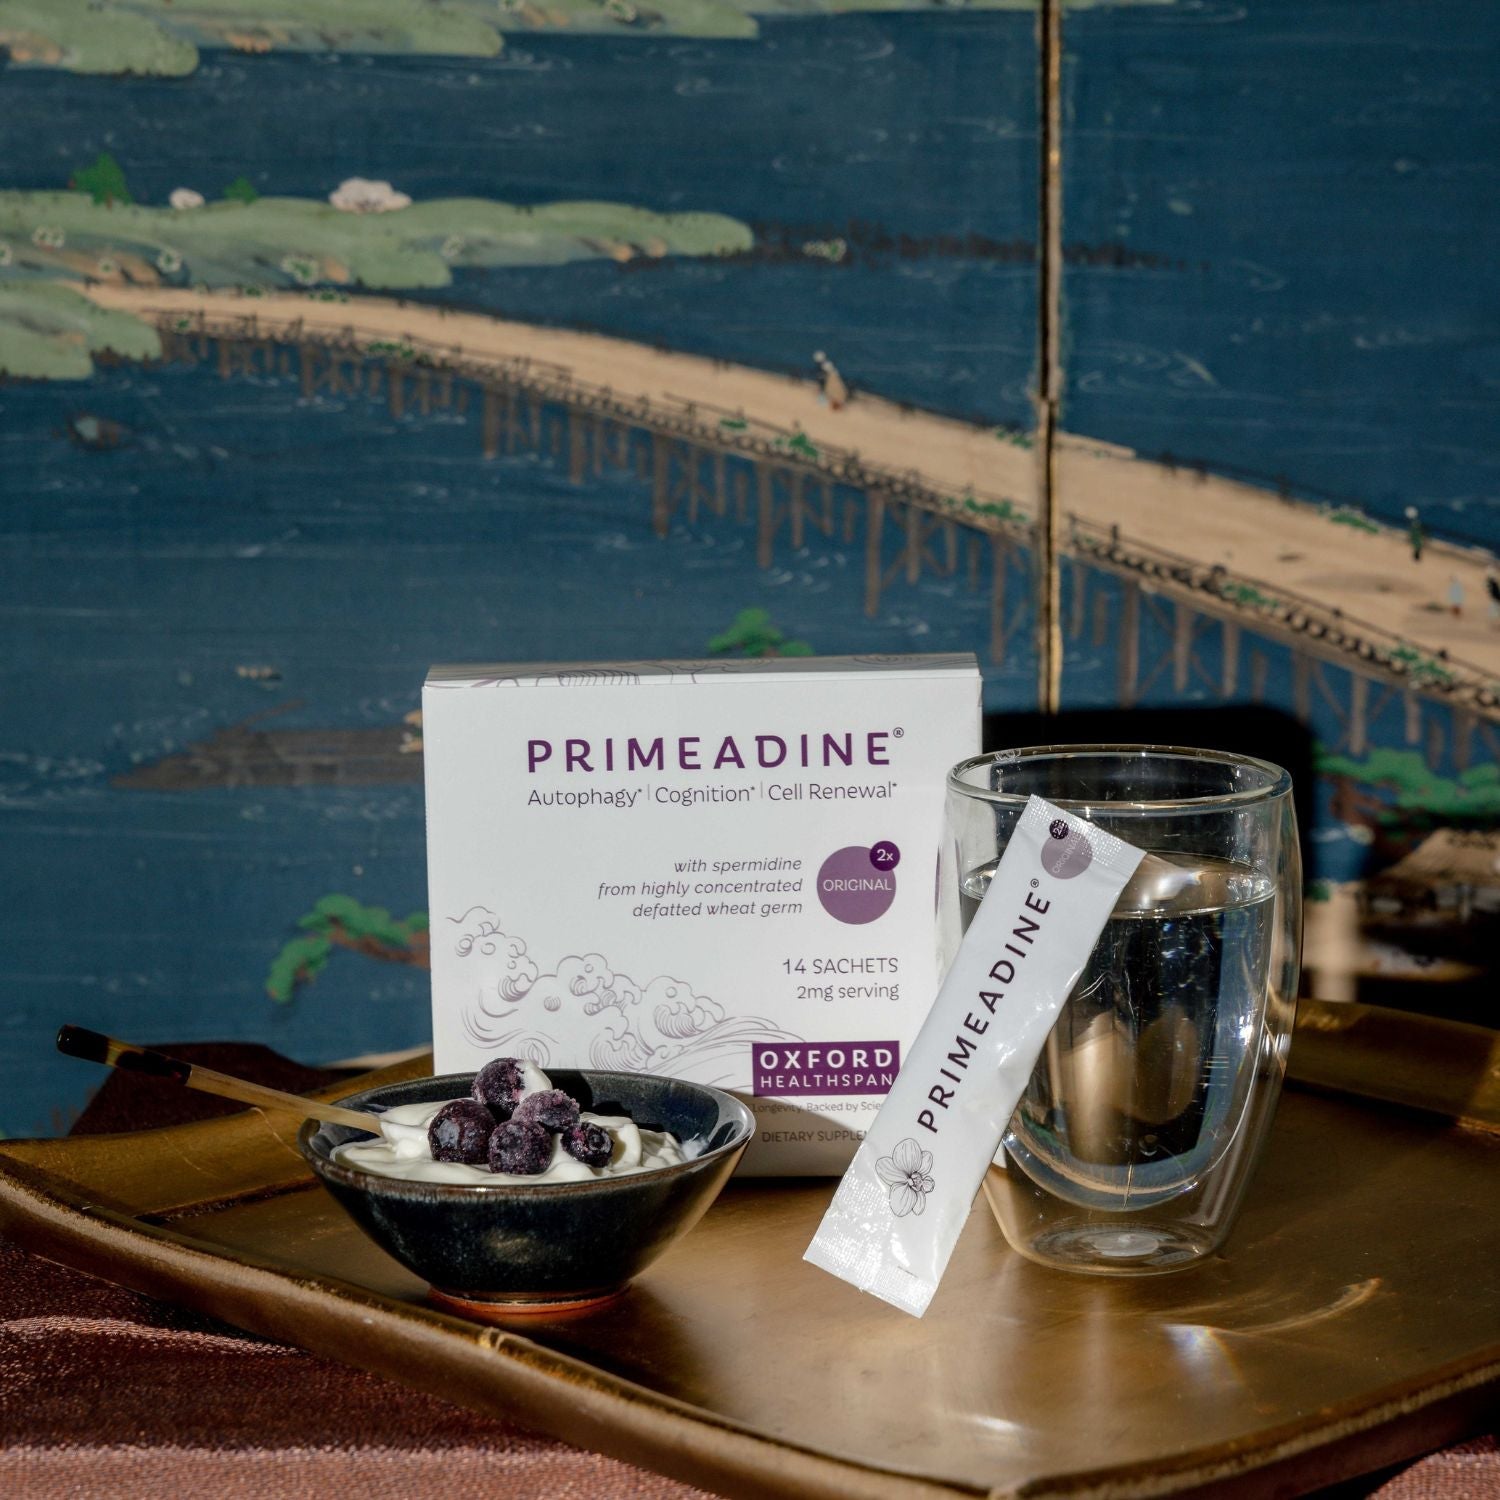 Primeadine® Original Spermidine 2mg Sachets with Water